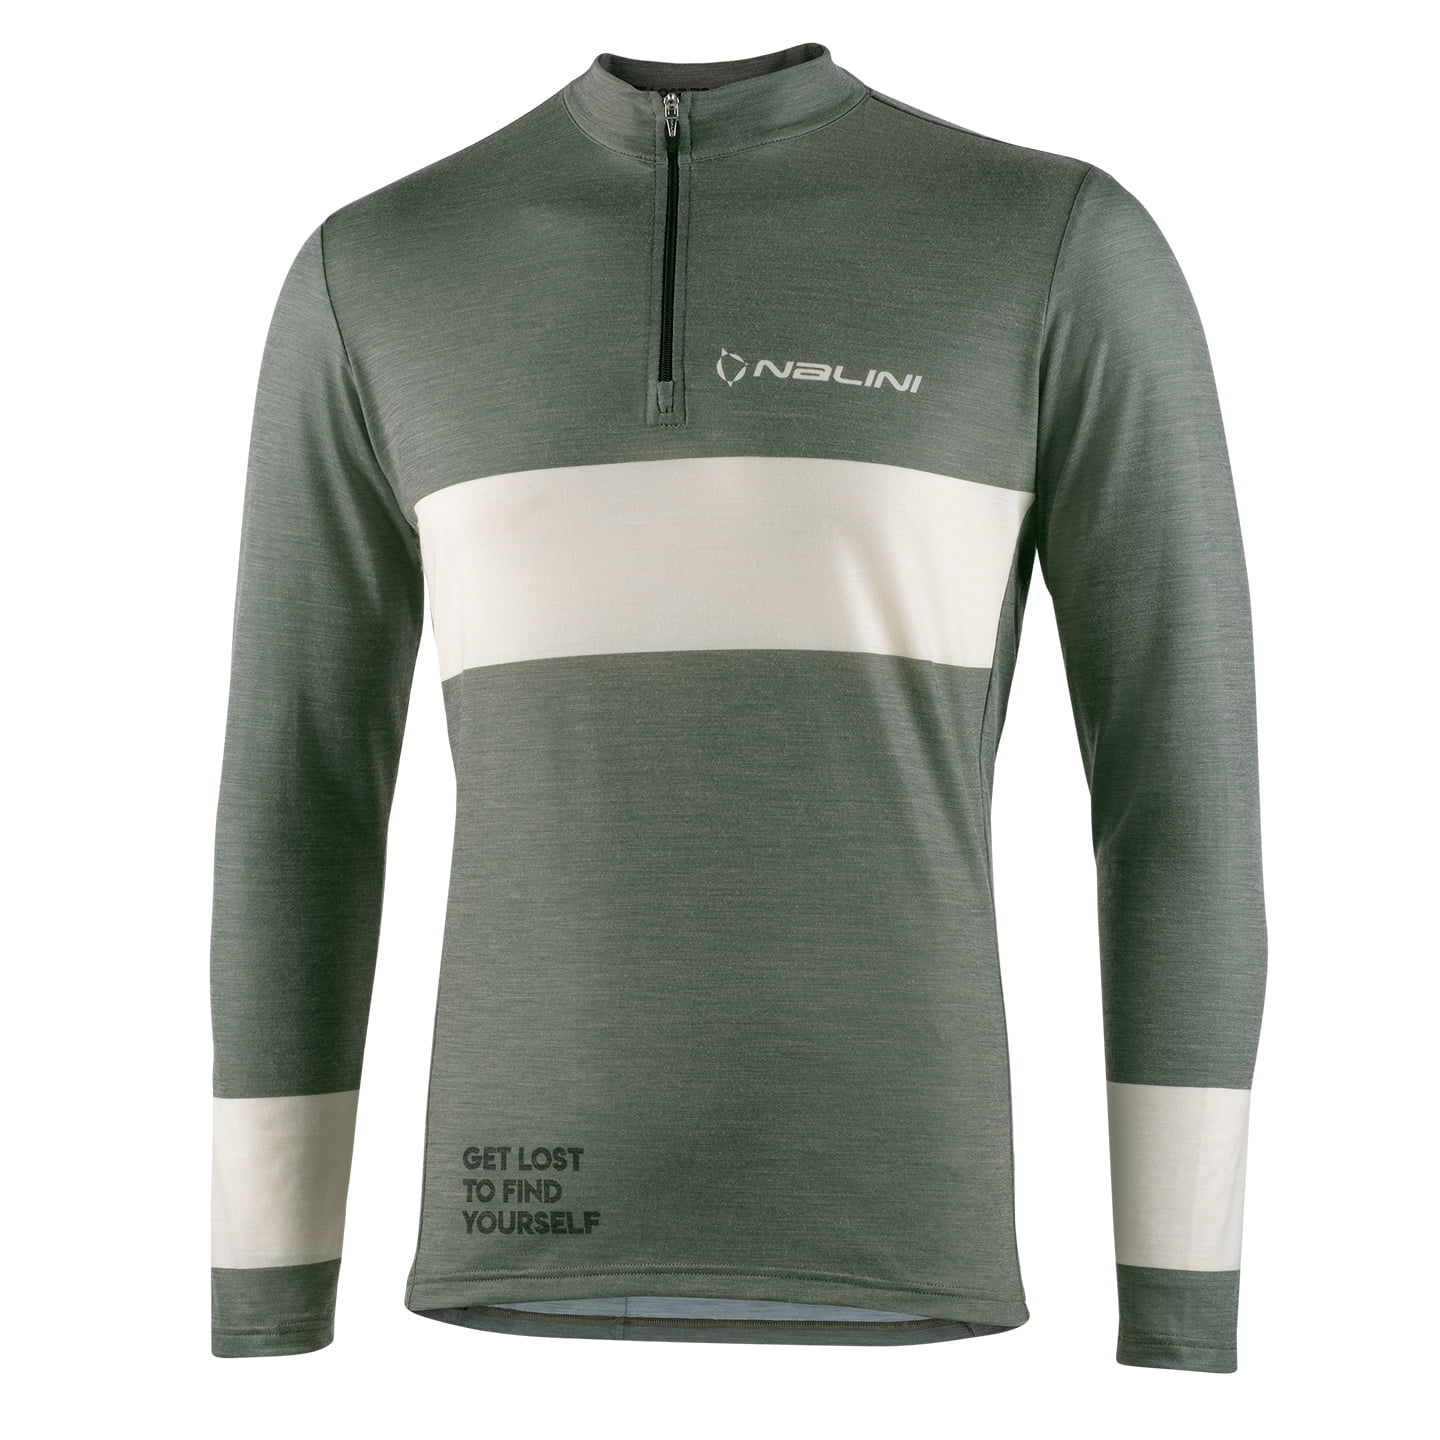 NALINI New Wool Long Sleeve Jersey Bikeshirt, for men, size XL, Cycling jersey, Cycle clothing